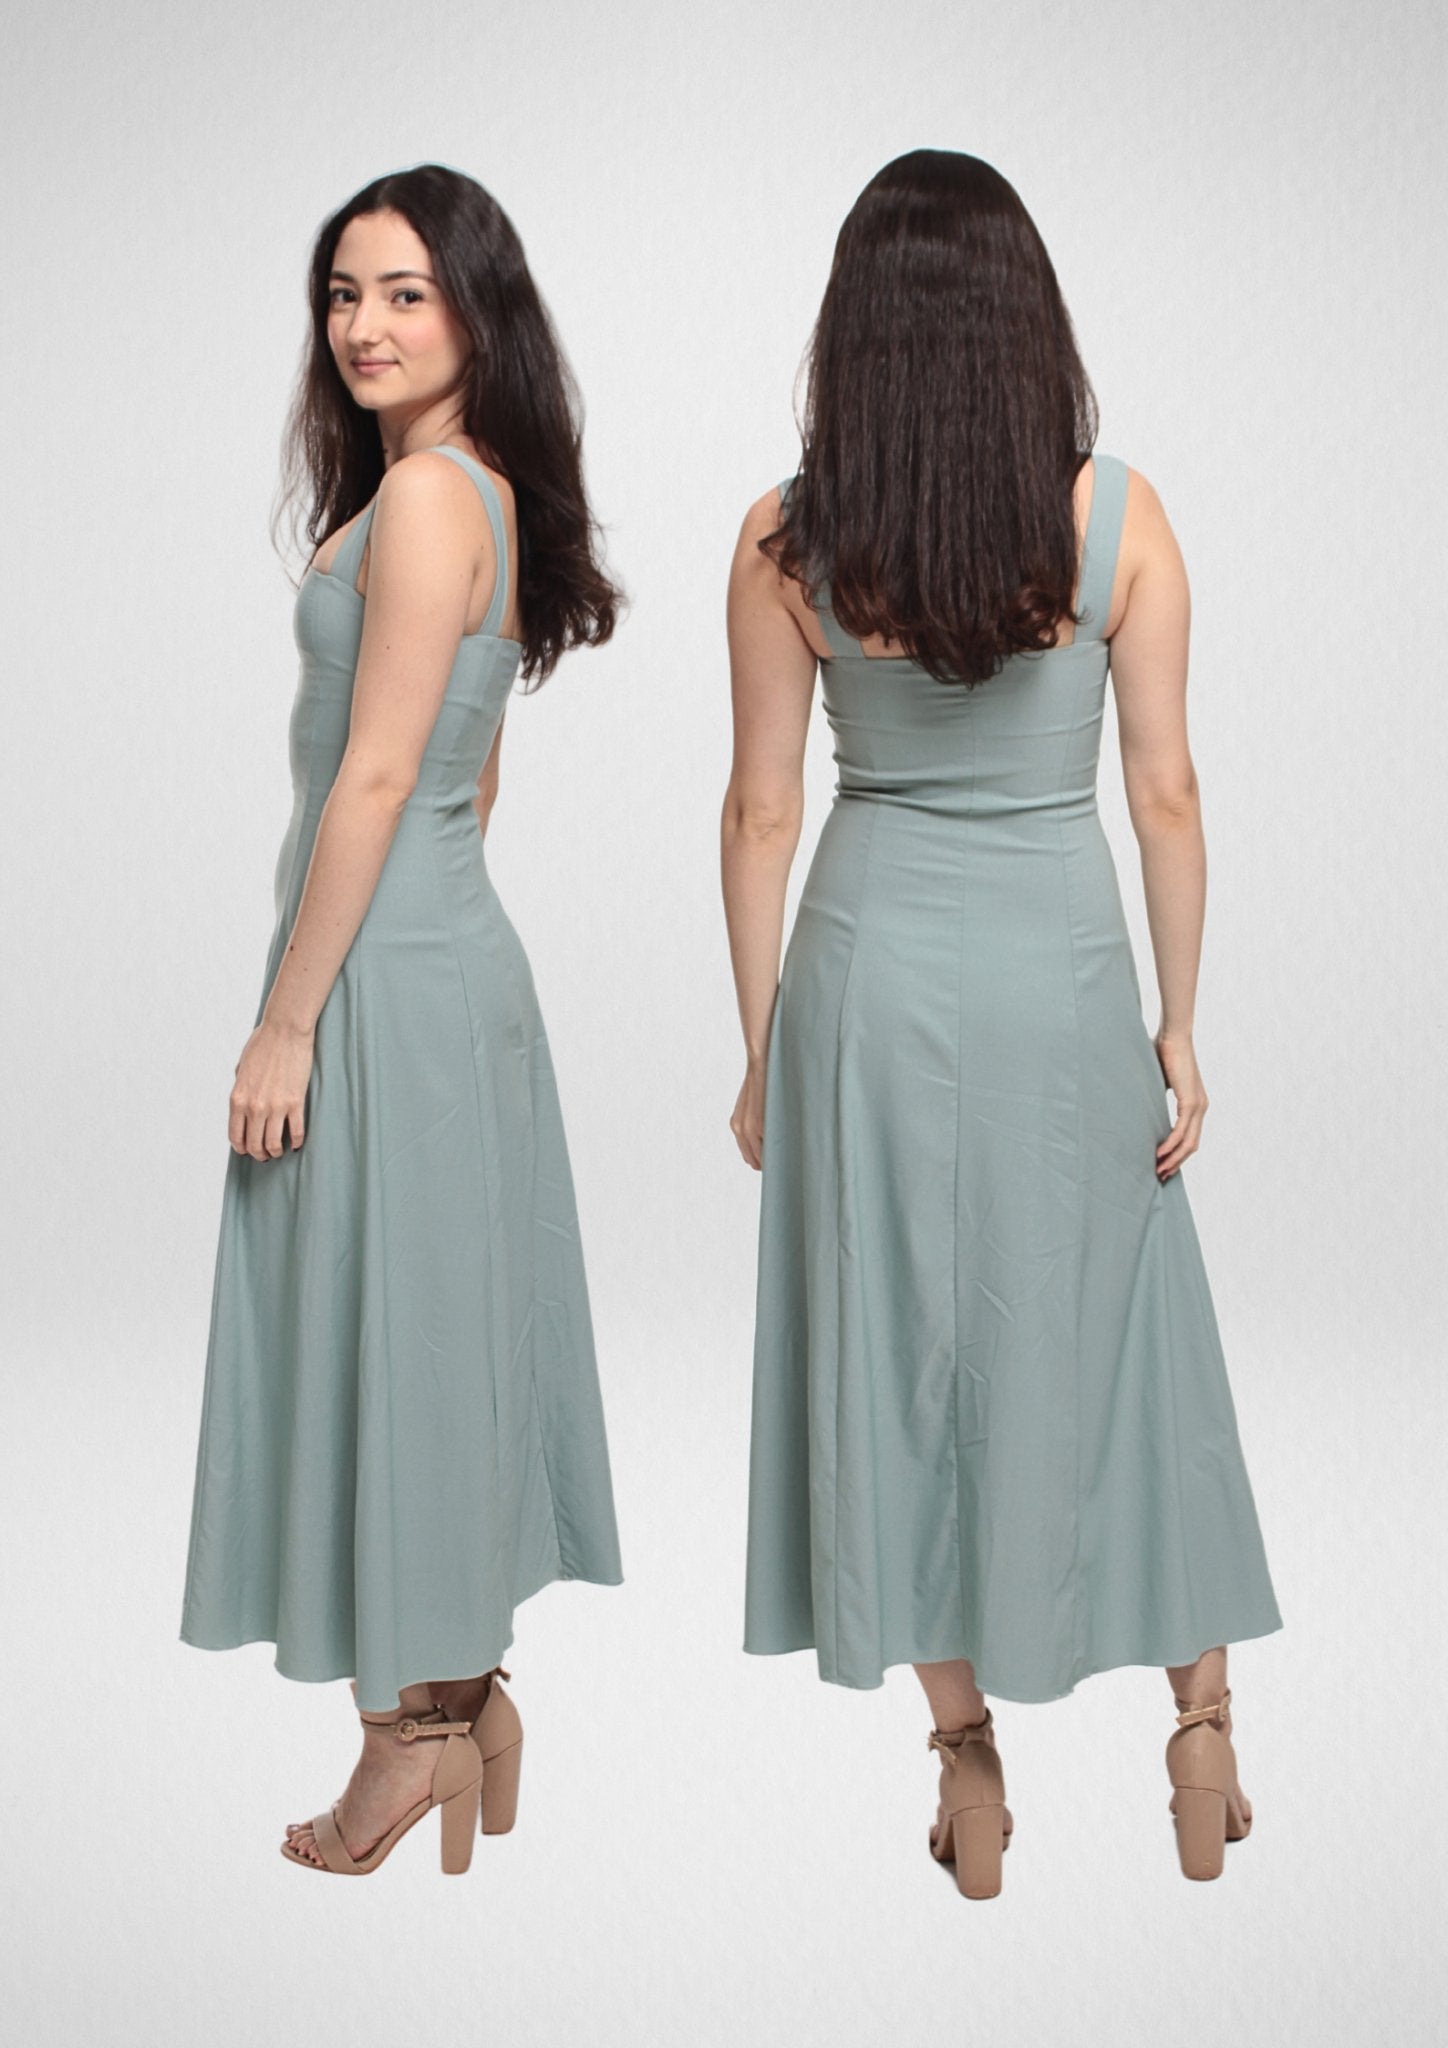 Best Selling Dress Sewing Pattern Bundle [Emma, Amelia, Mia] - Friedlies